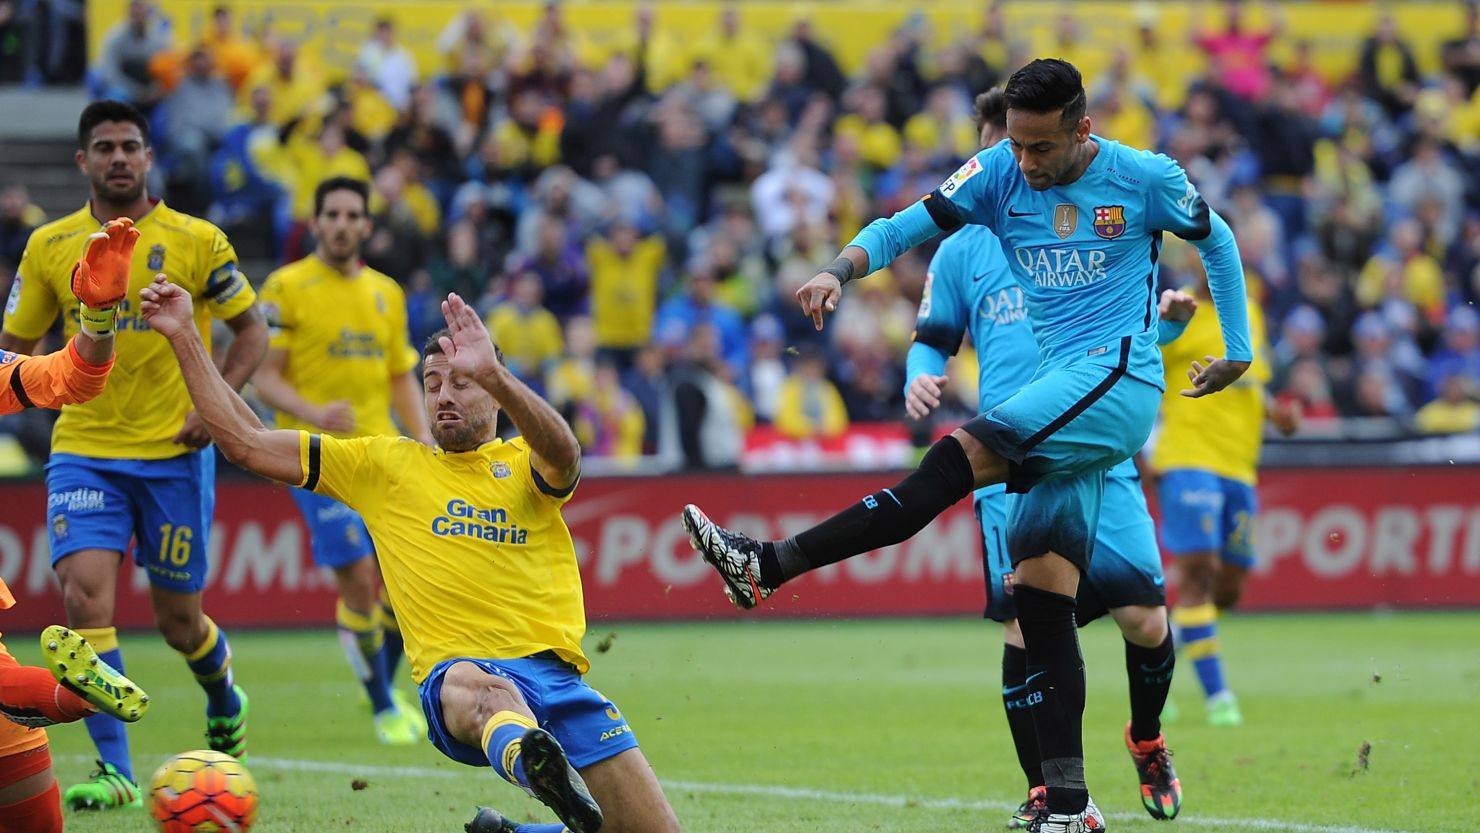 Neymar strikes home Barcelona's second goal in the 2-1 win at Las Palmas in the Estadio Gran Canaria.